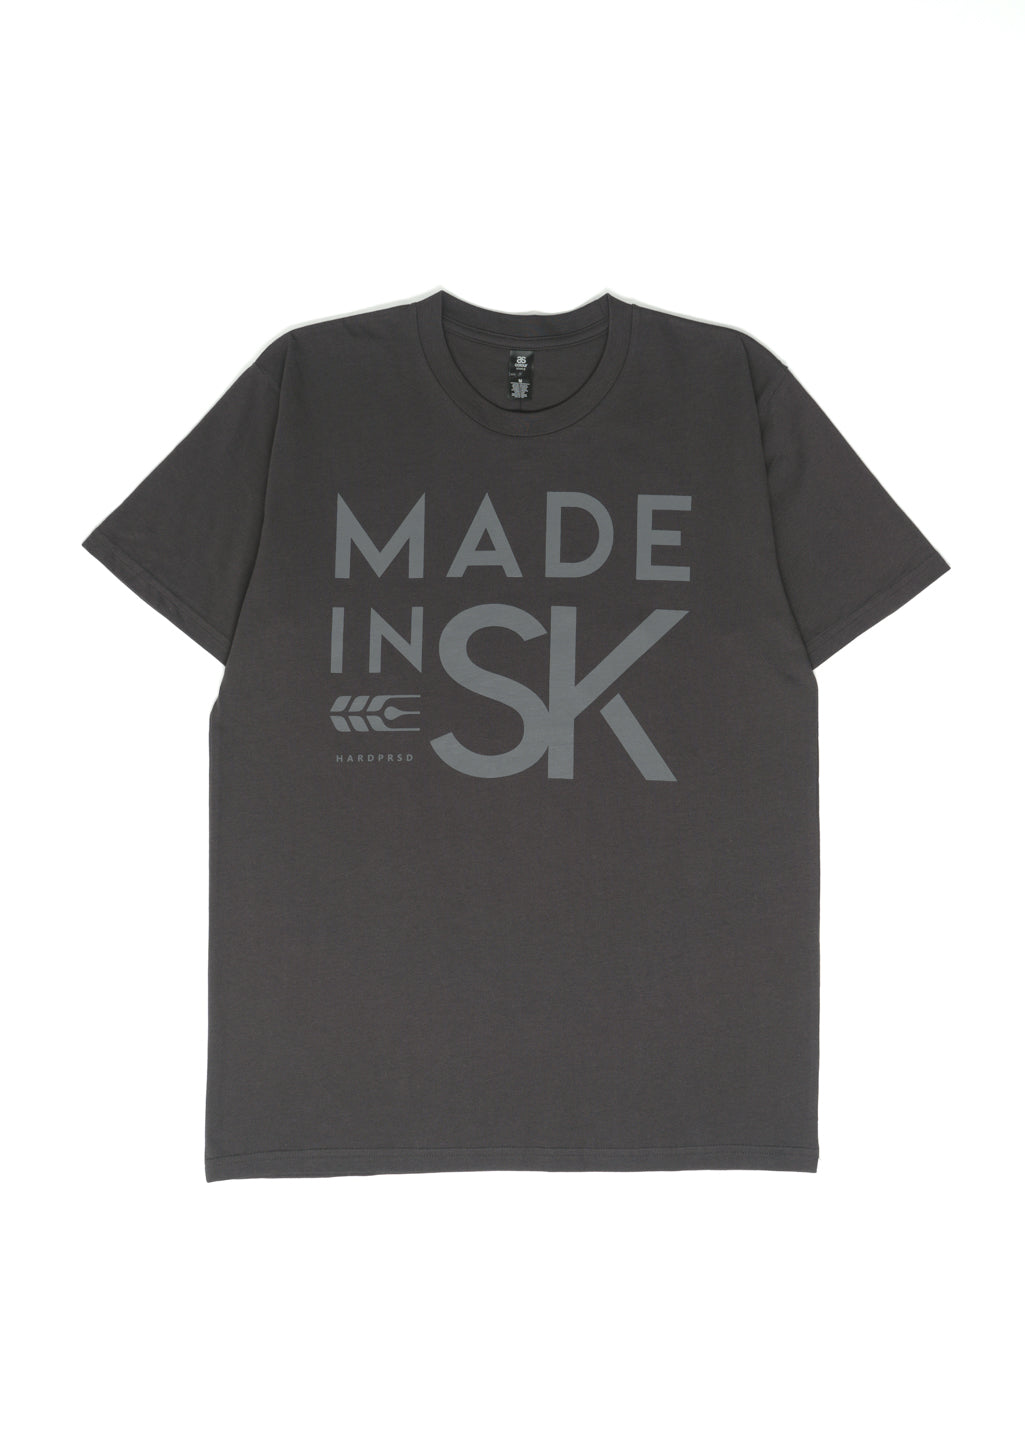 Made in SK Tee | Charcoal | Unisex and Ladies - Hardpressed Print Studio Inc.